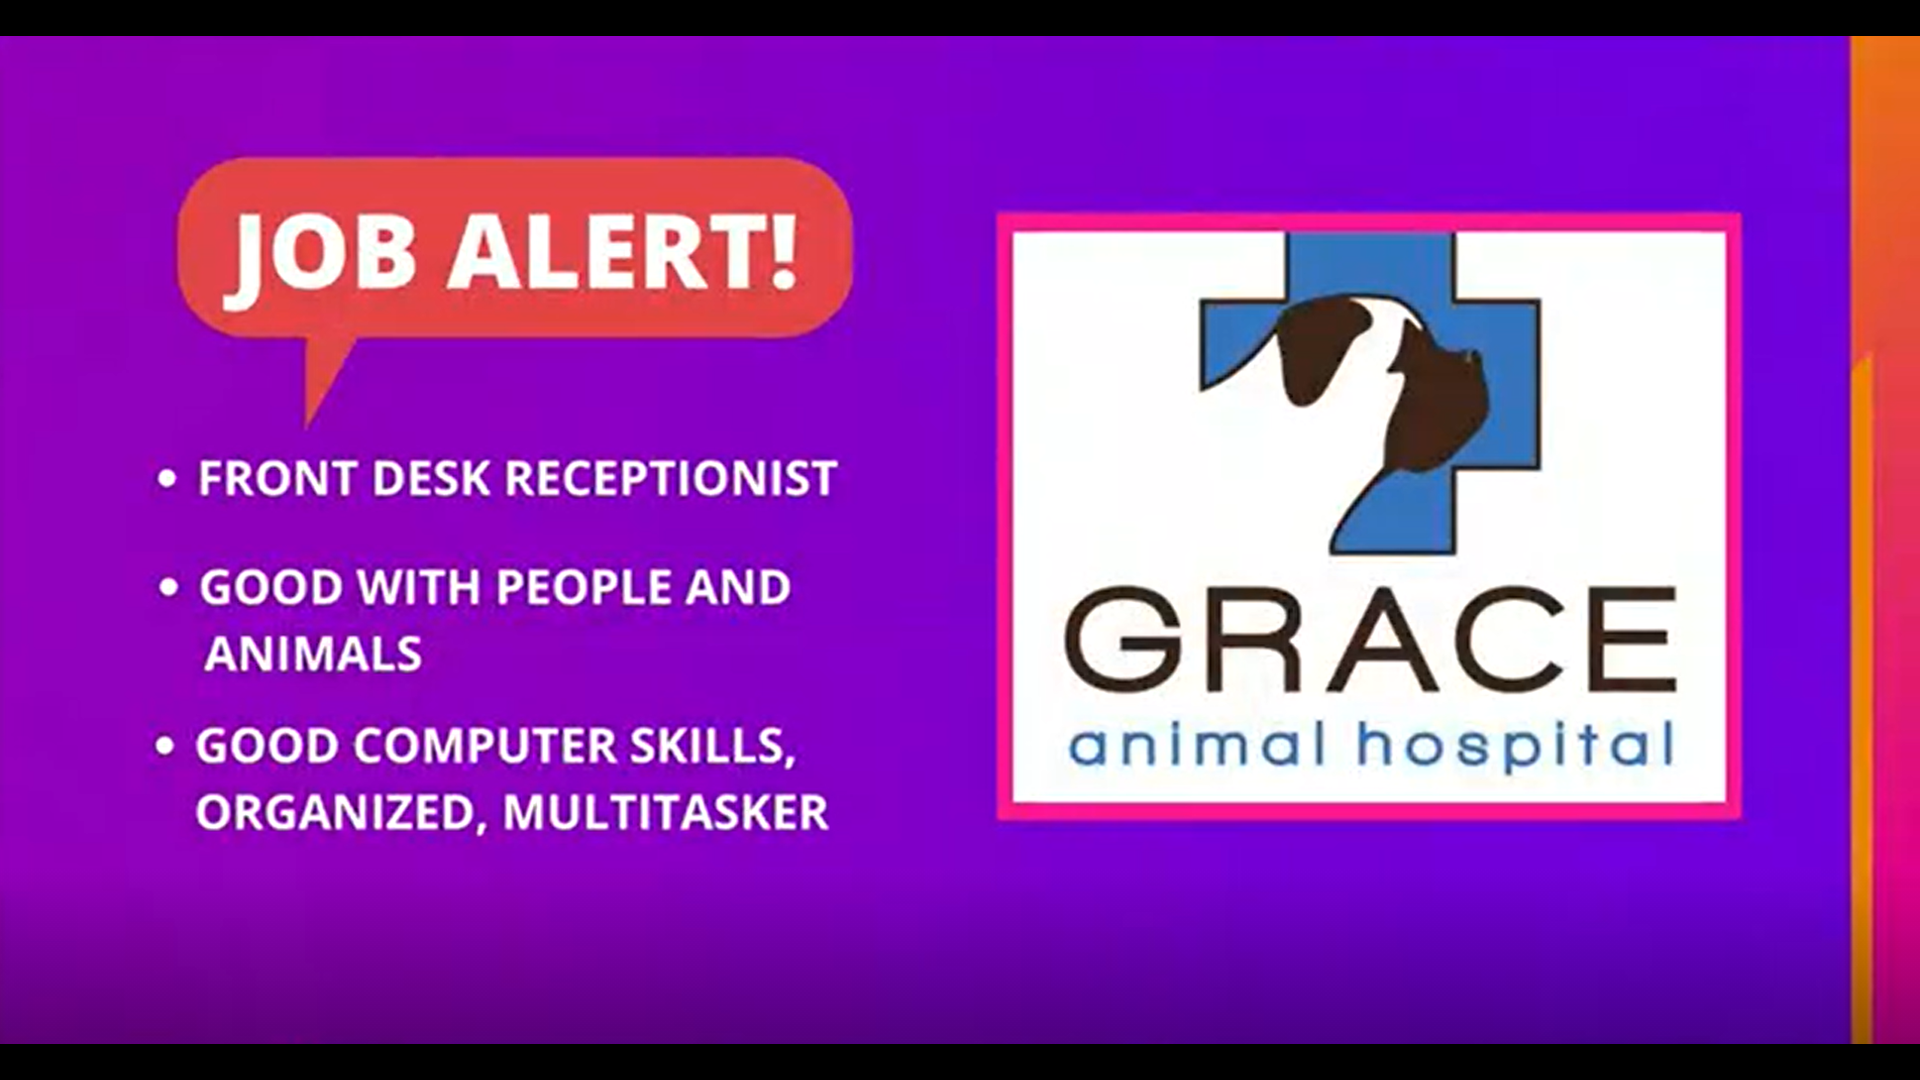 Grace Animal Hospital job alert - March 2021! 